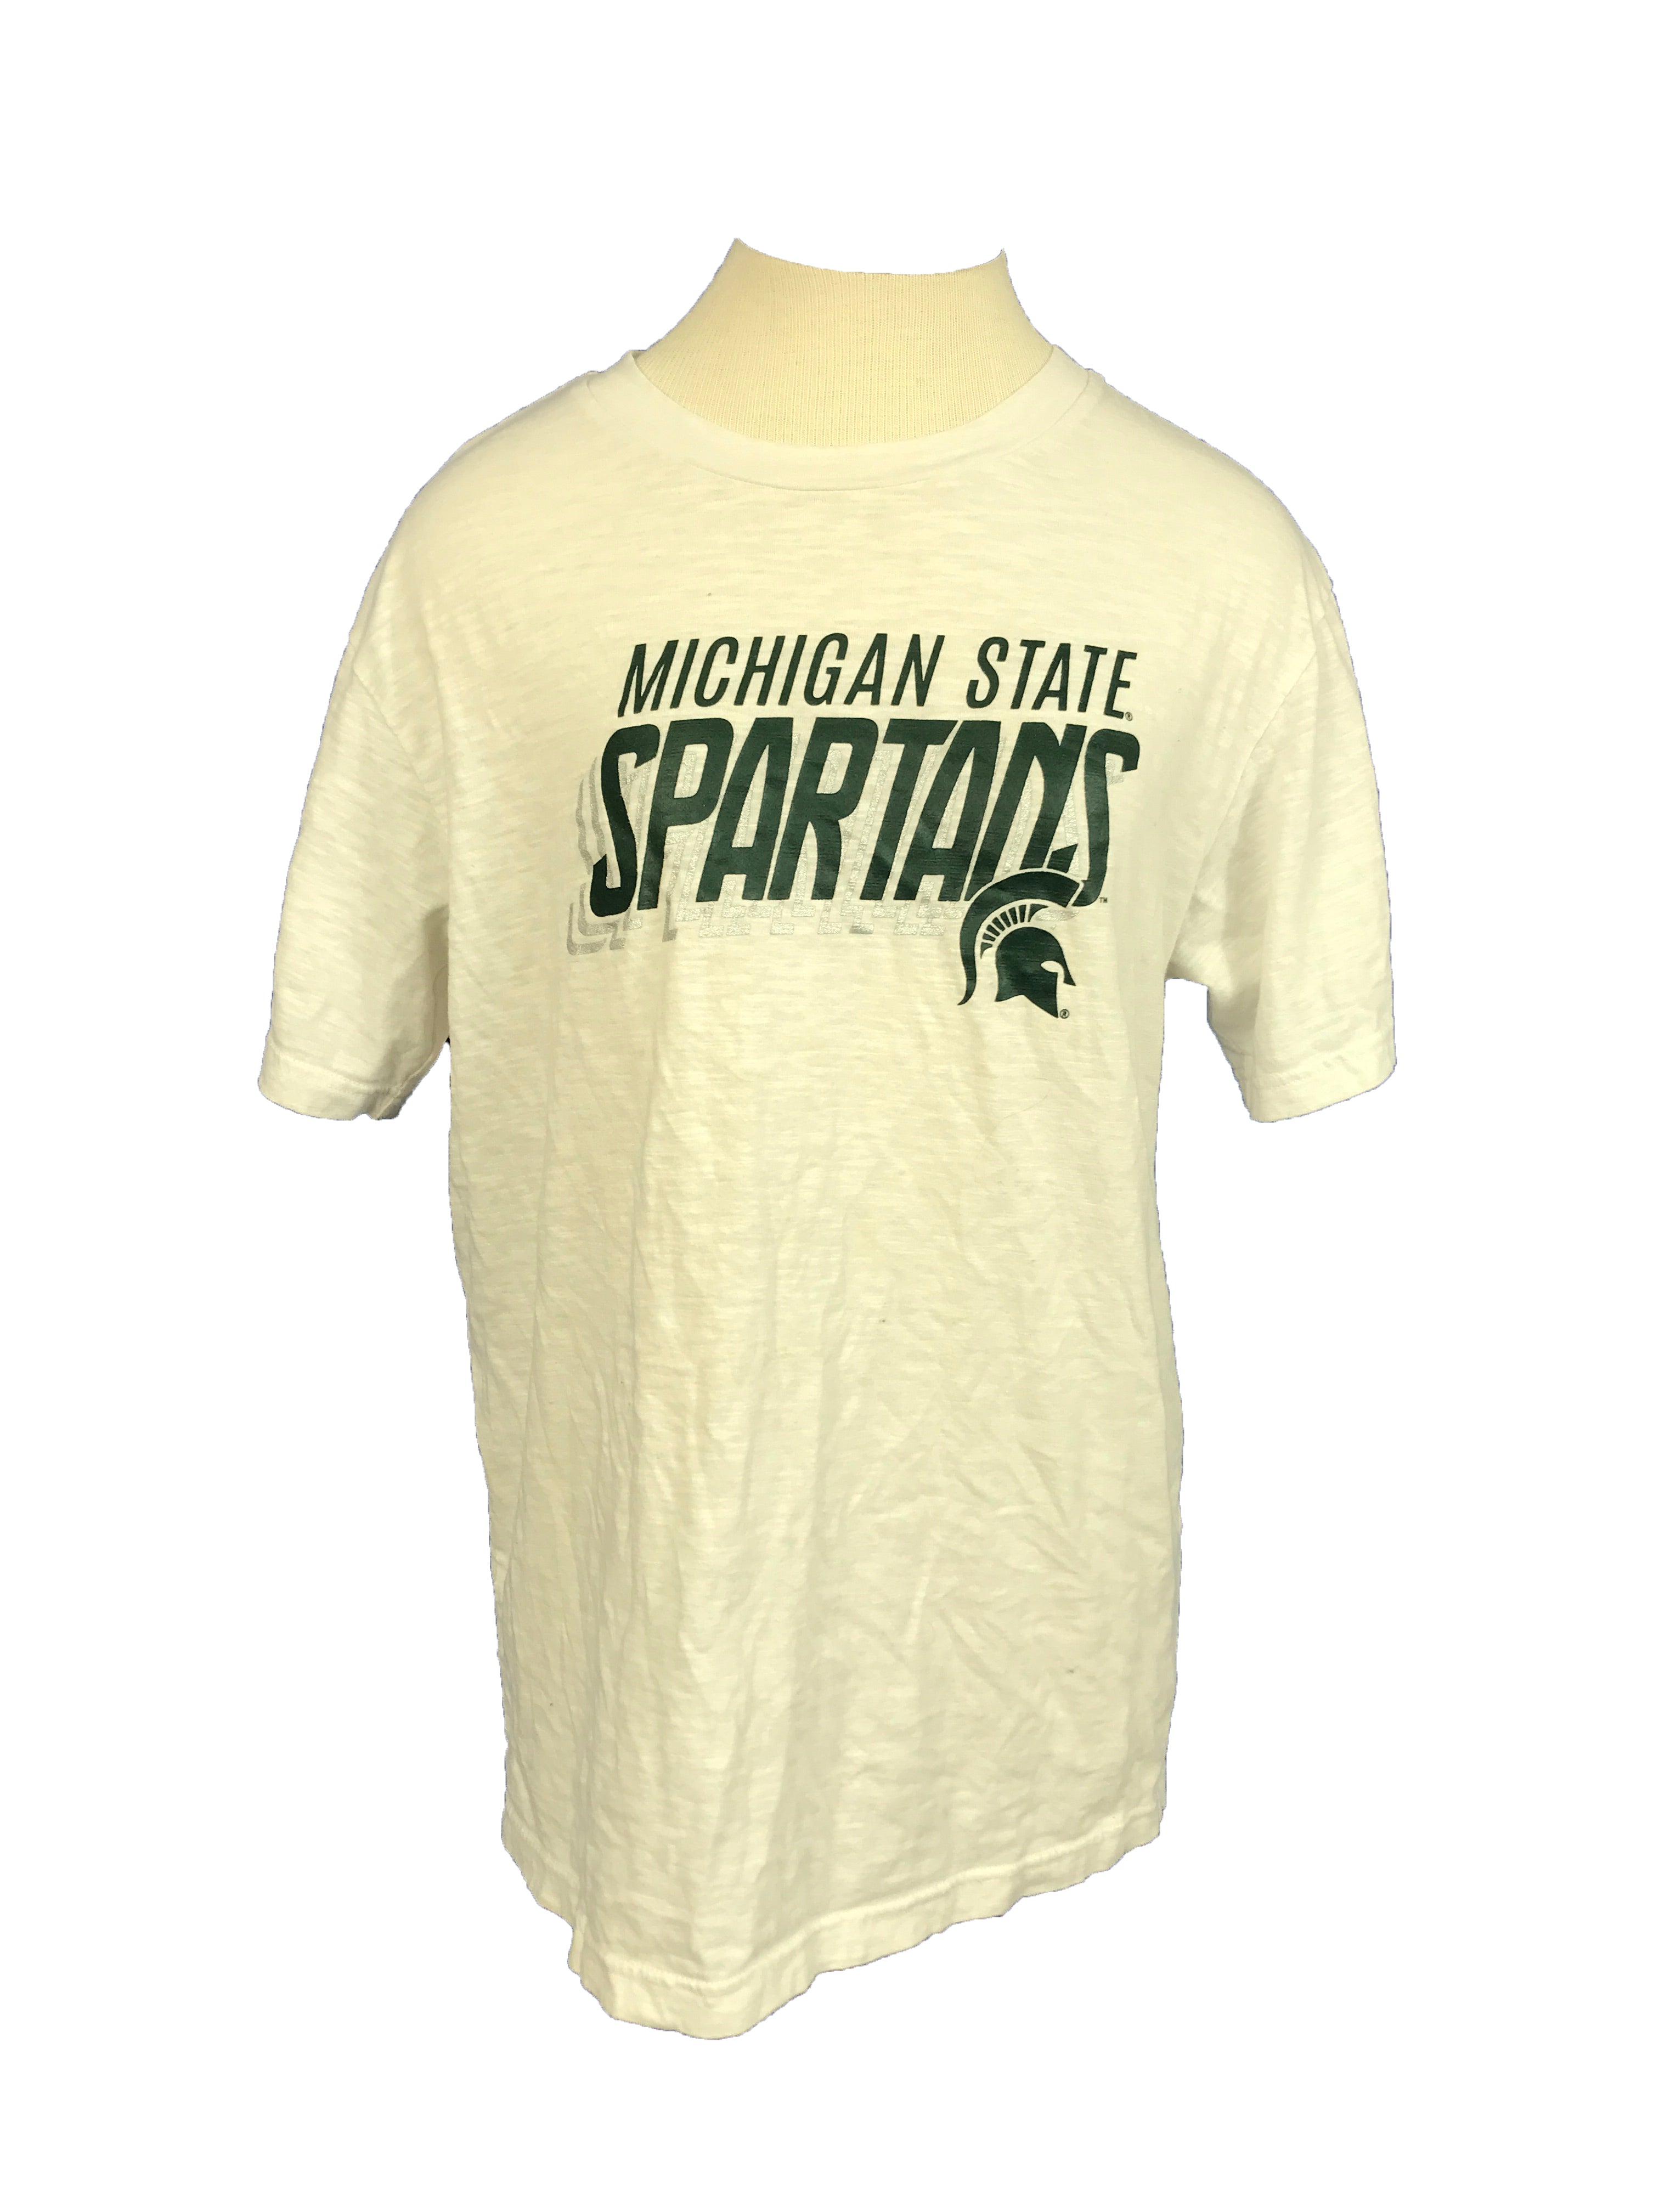 White Michigan State Spartans T-Shirt Unisex Size M